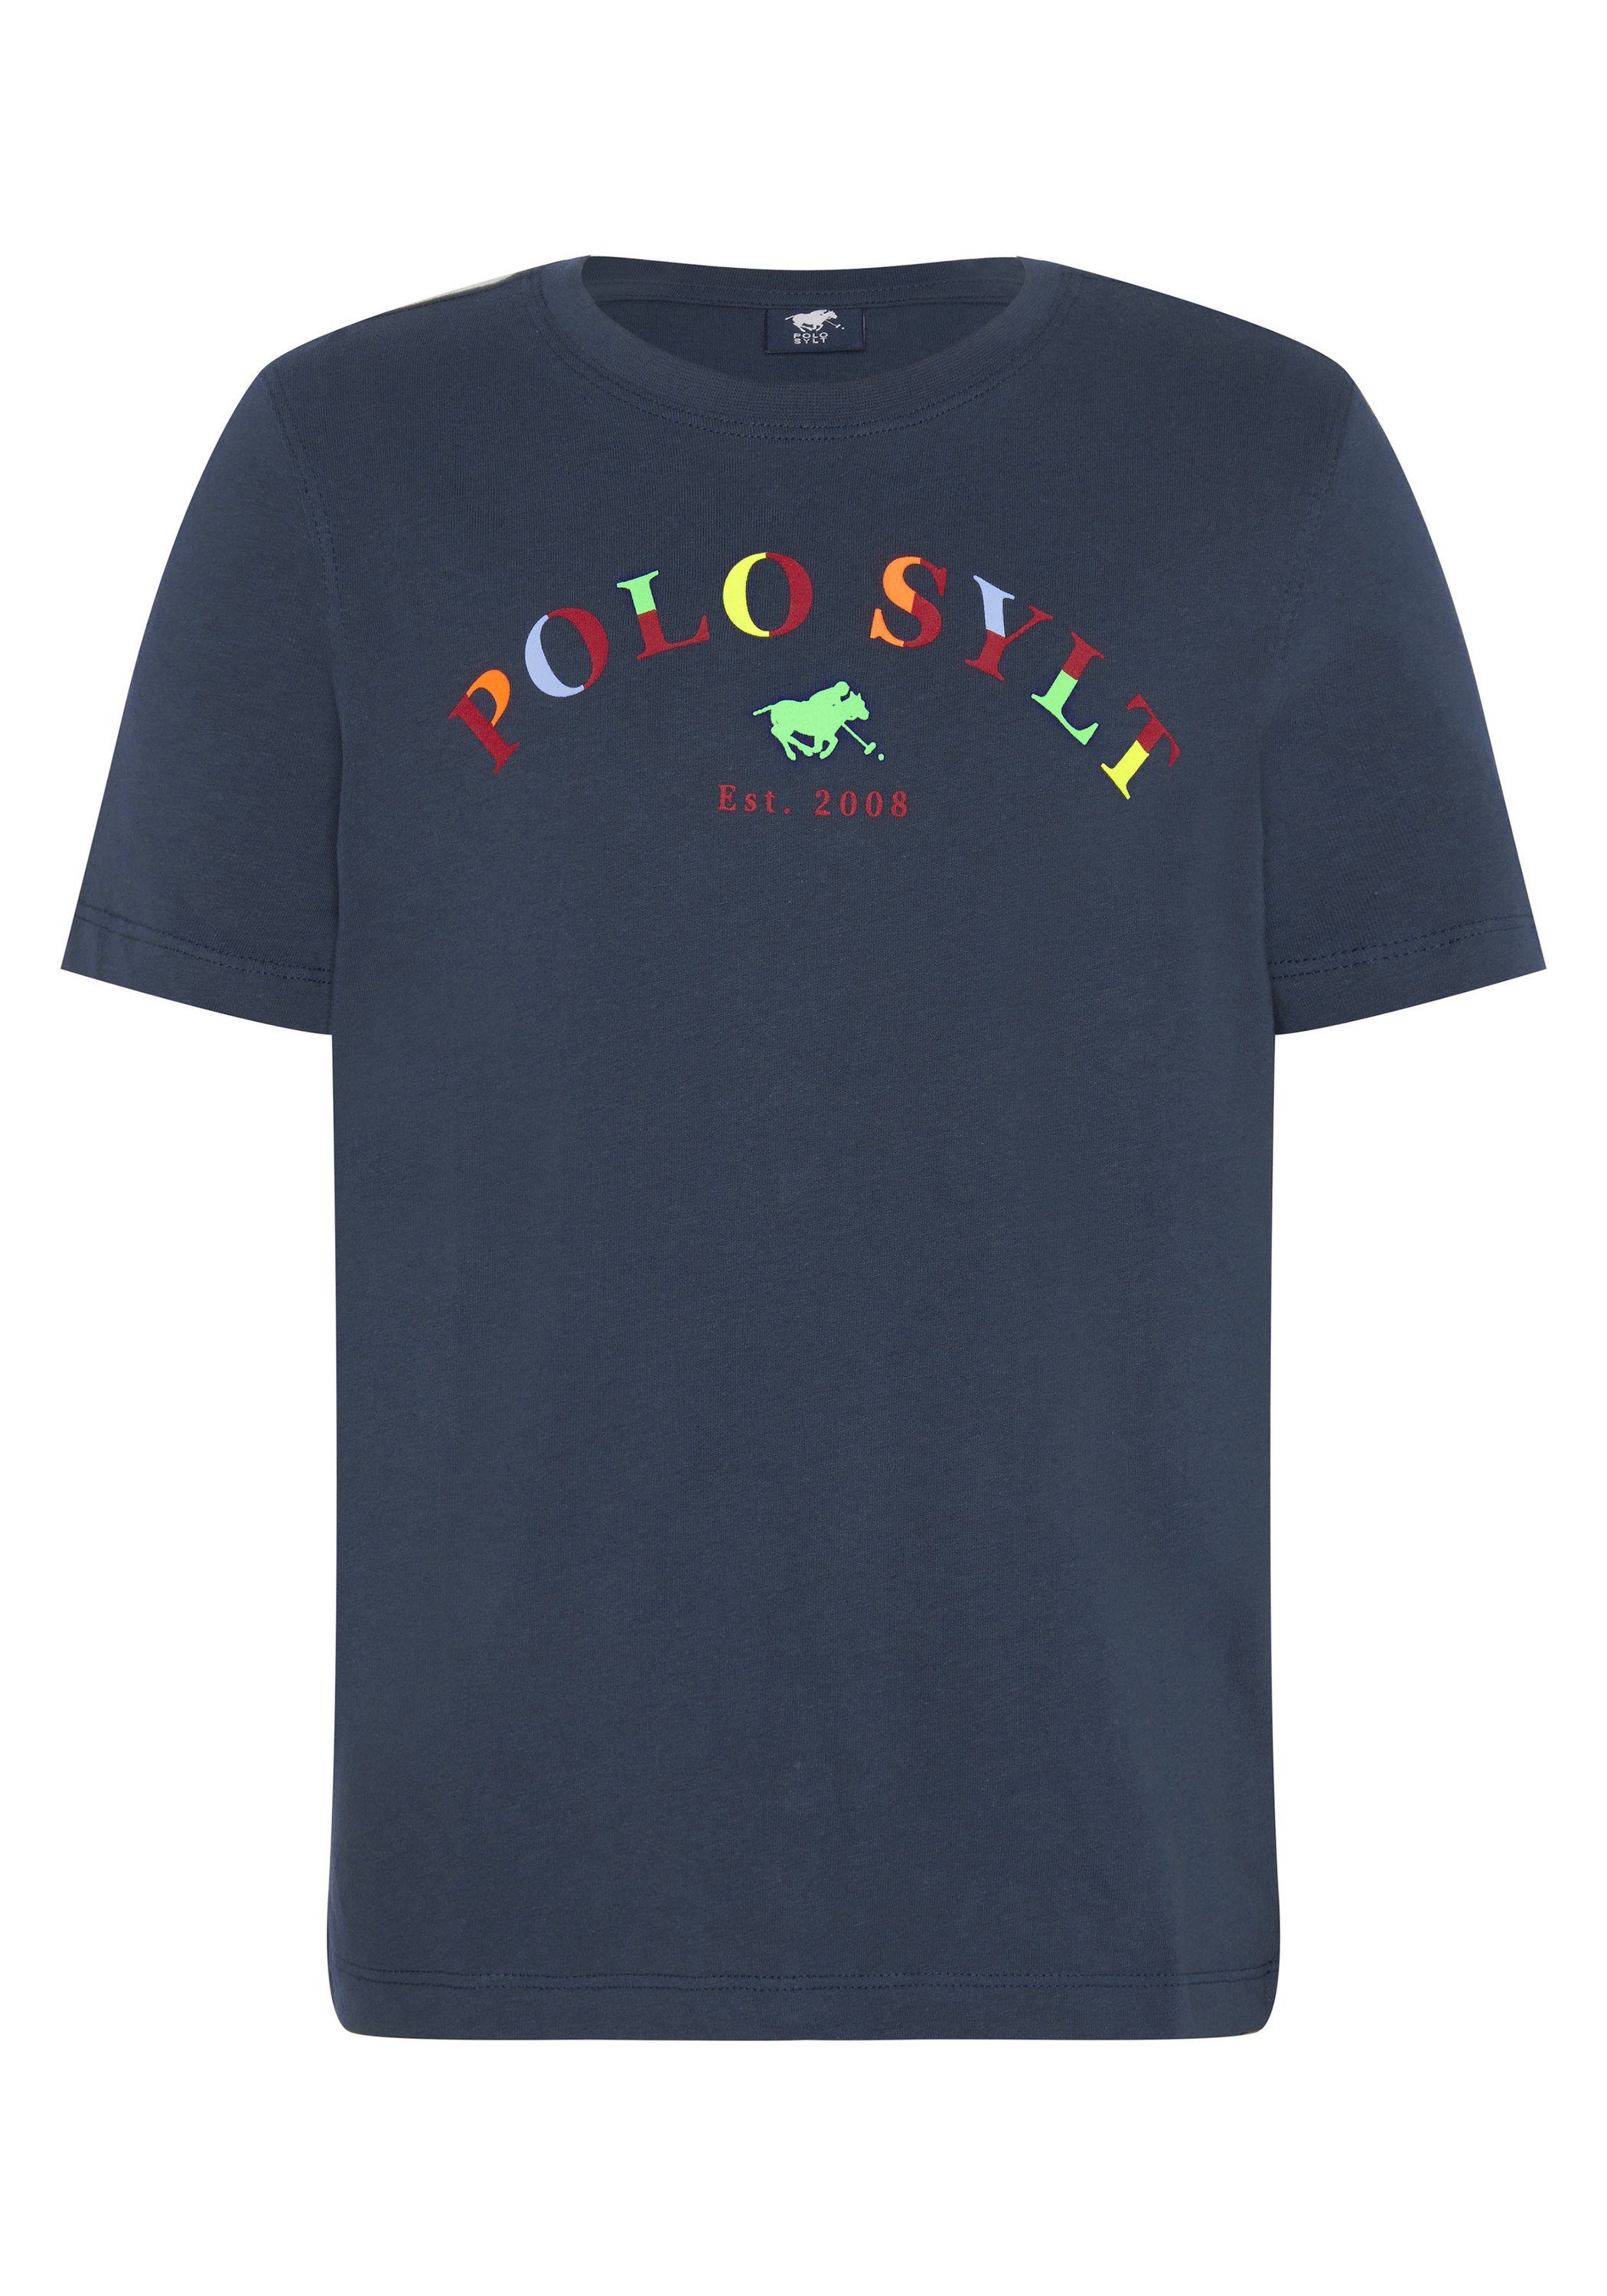 Polo Eclipse farbenfrohem 19-4010 Sylt Print-Shirt mit Total Logoprint